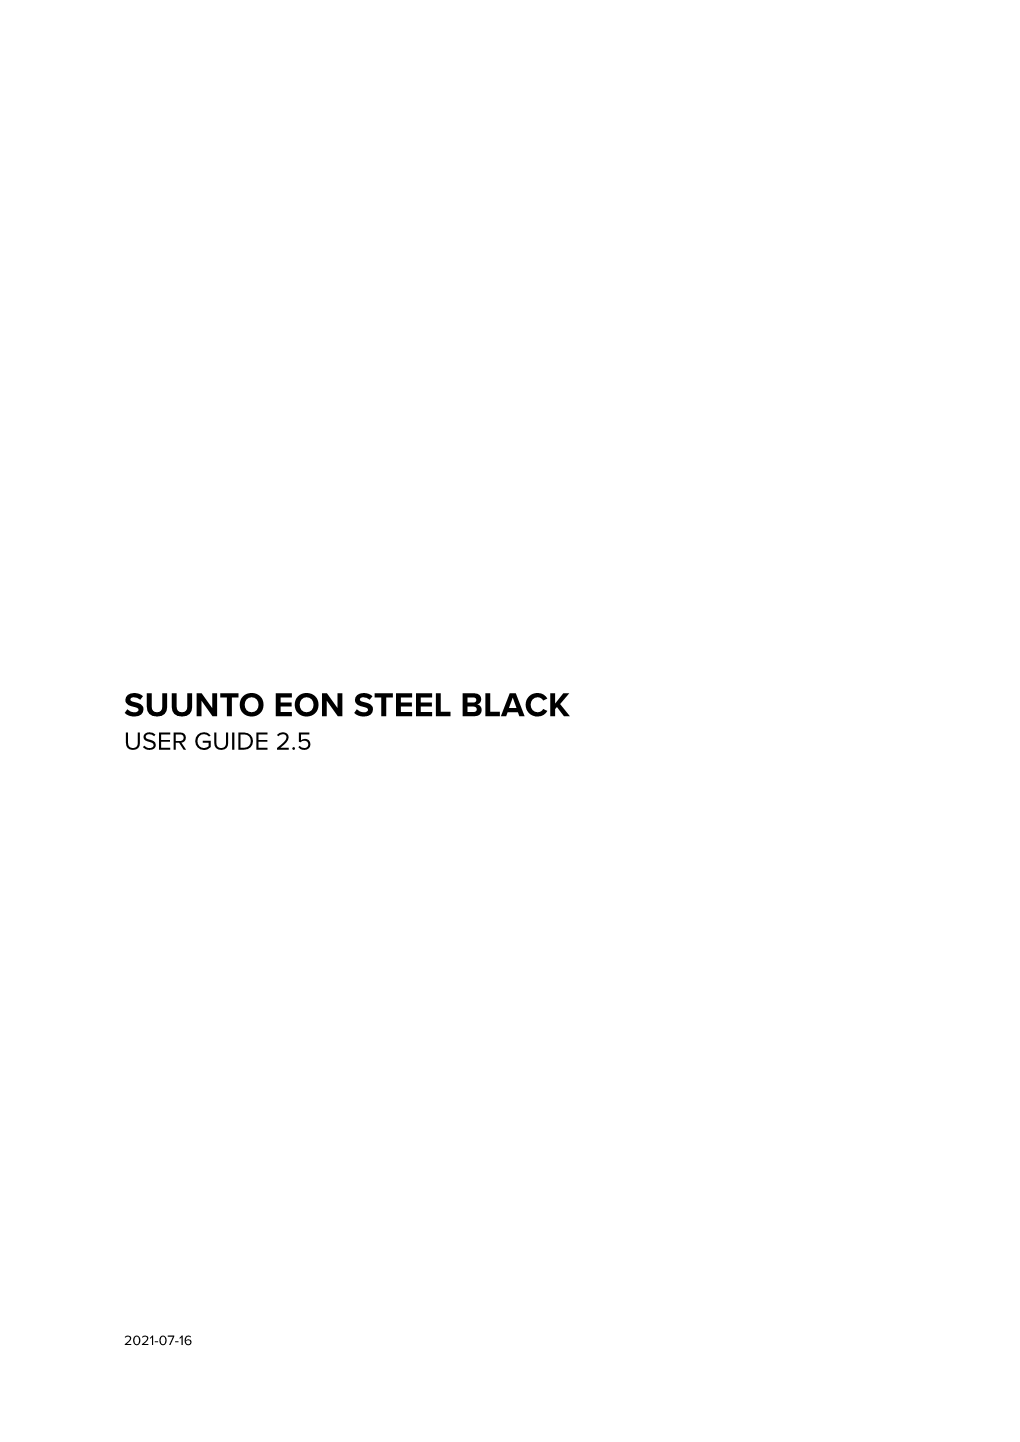 Suunto Eon Steel Black User Guide 2.5